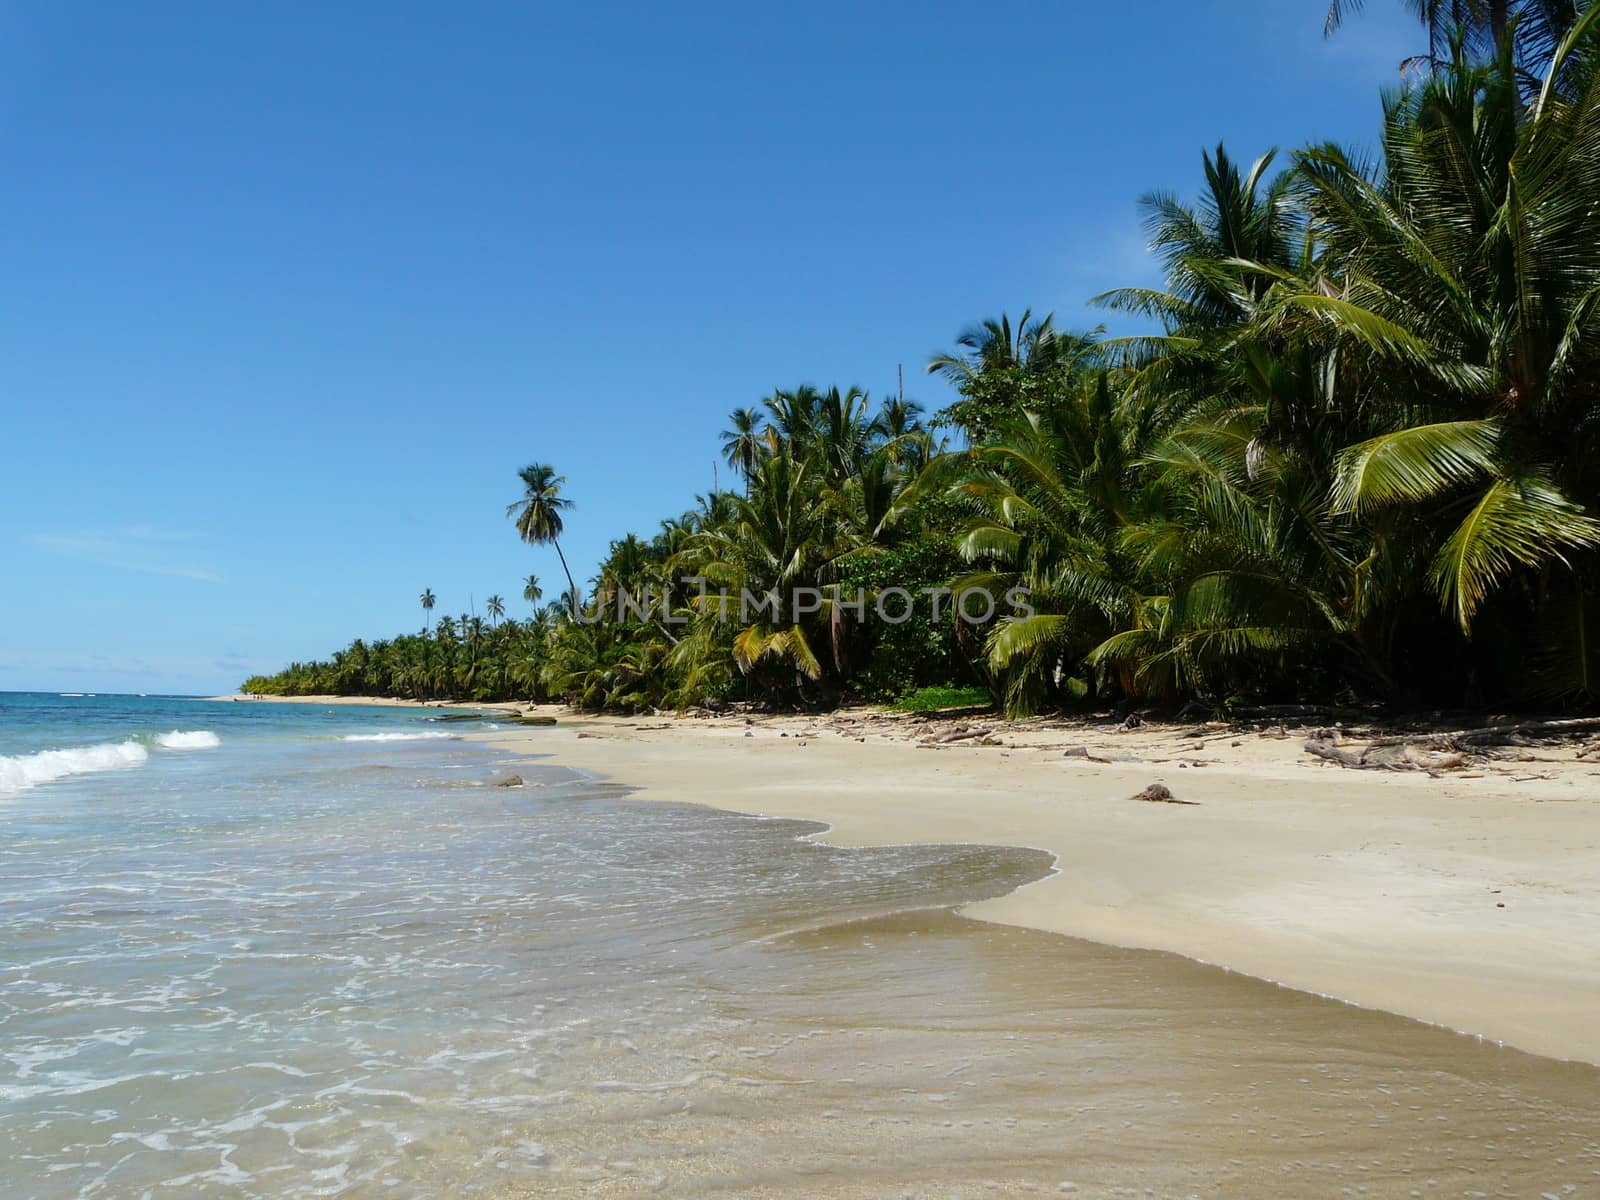 Coconuts trees on the beach,Caribbean, Punta Uva, Costa Rica